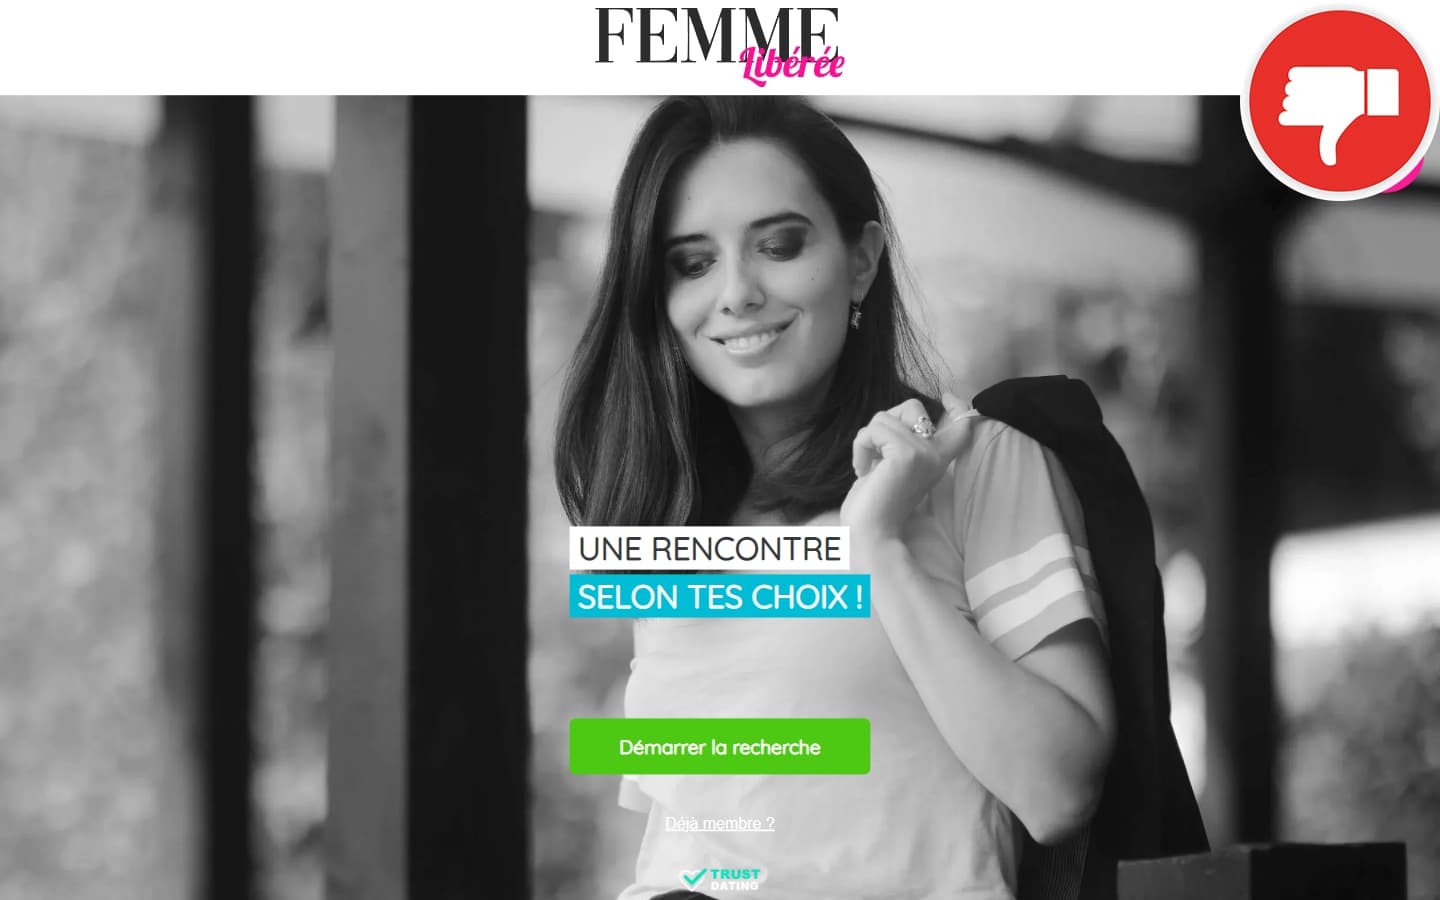 Femme-Liberee.com